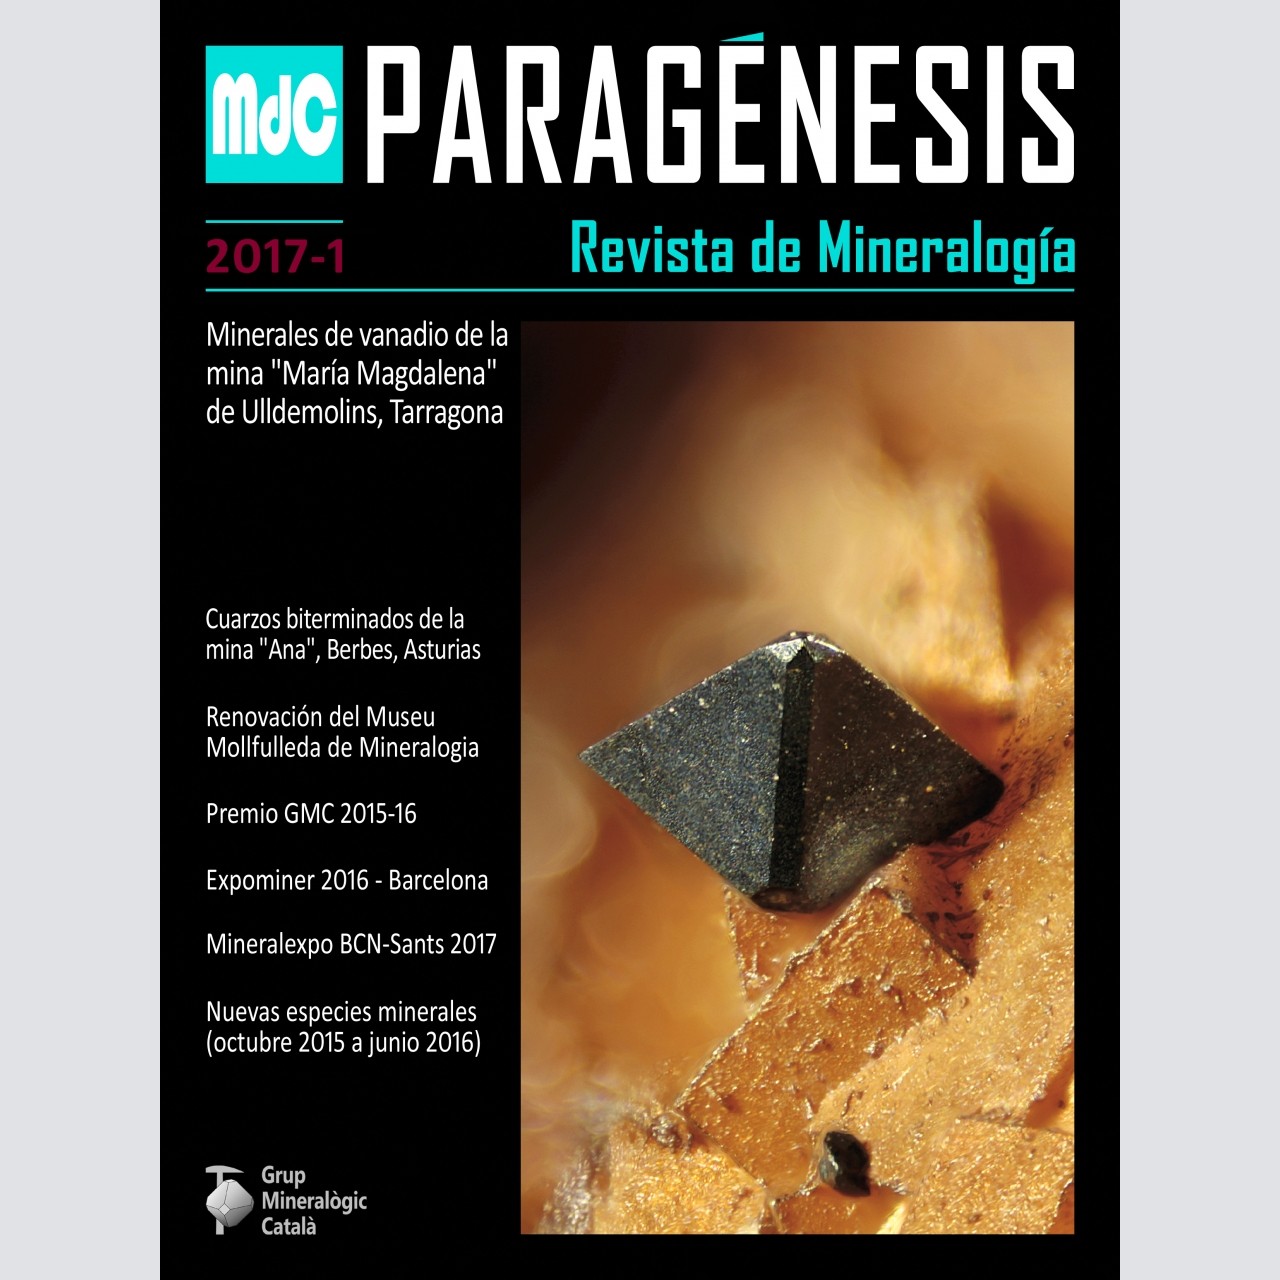 Paragénesis. Revista de Mineralogía (2017-1)